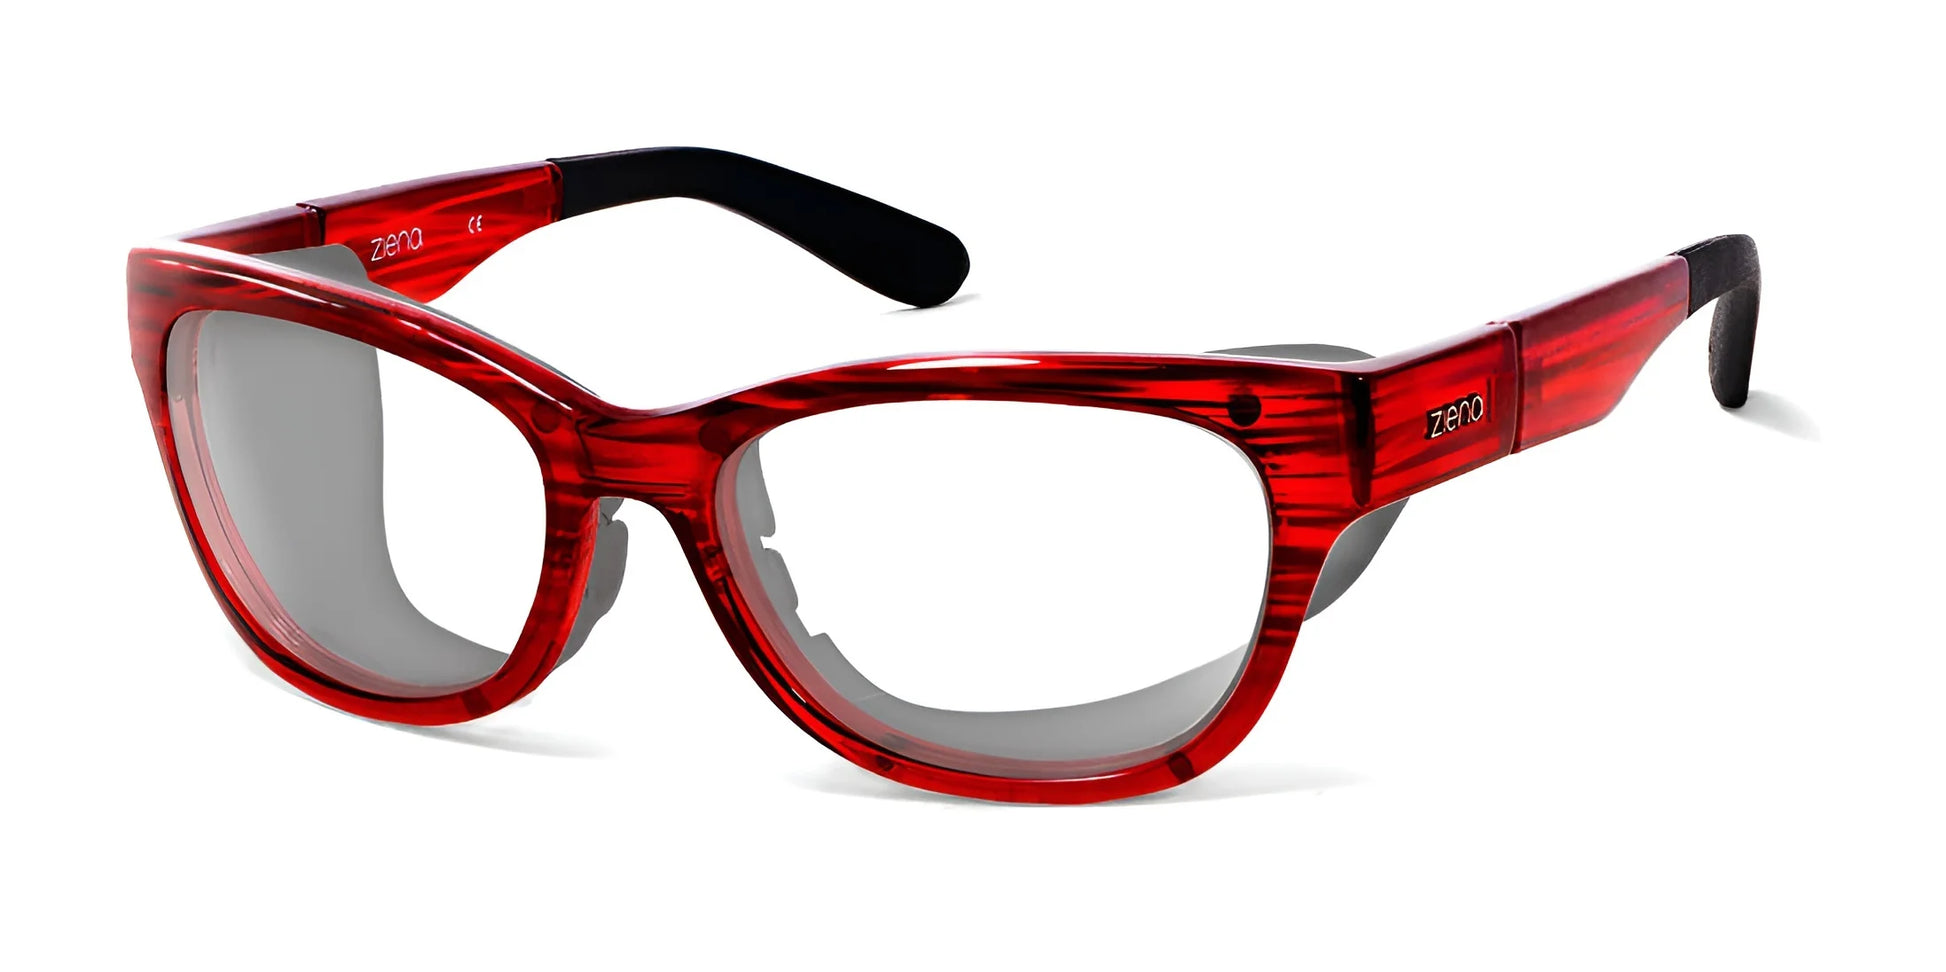 Ziena Marina Eyeglasses Merlot / Clear +2.50 / Black